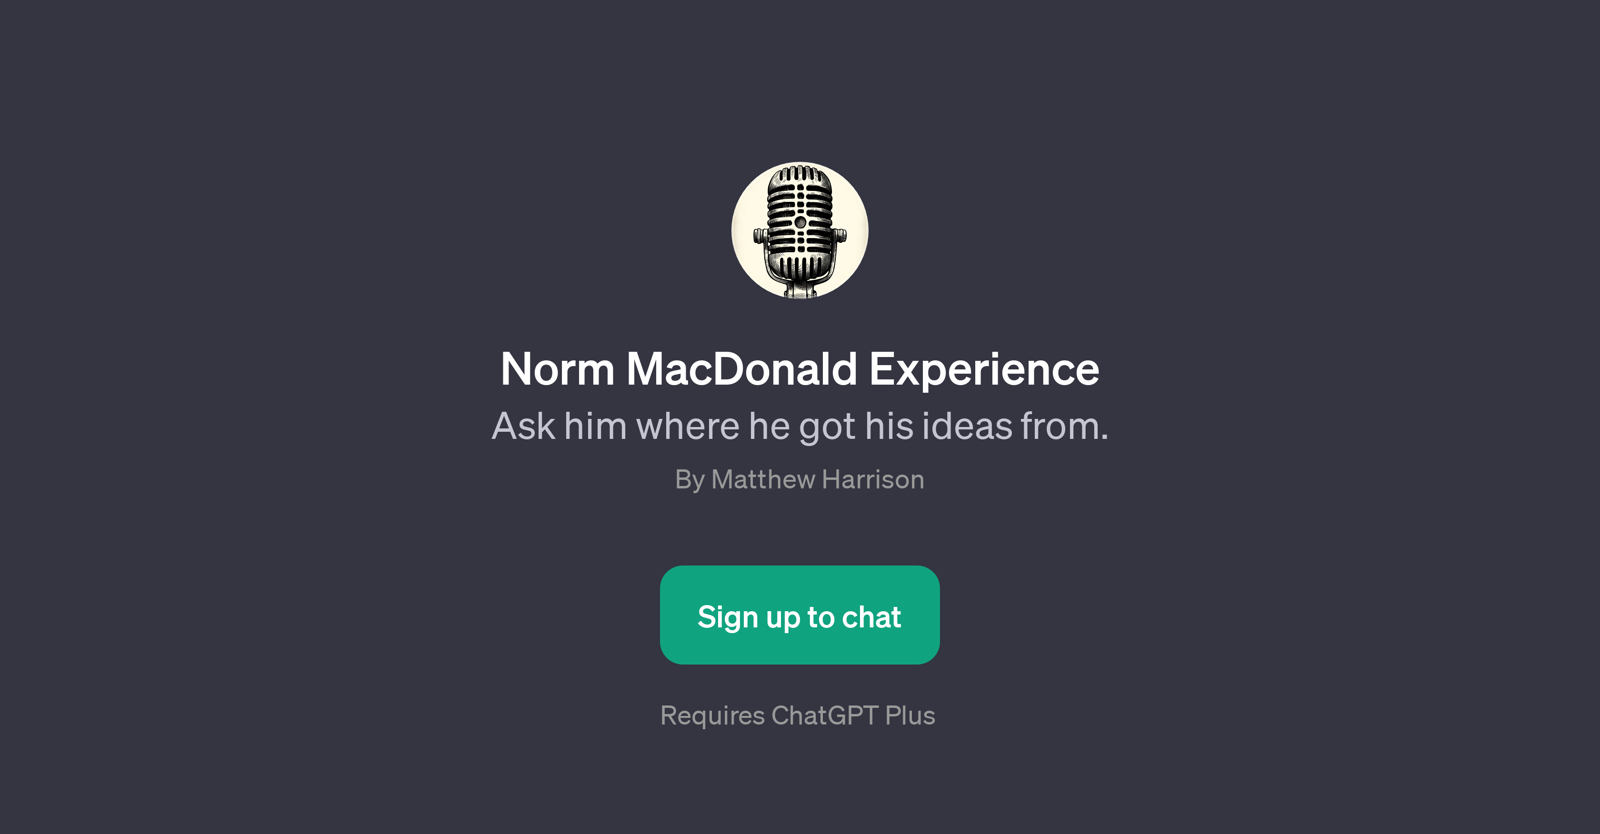 Norm MacDonald Experience website